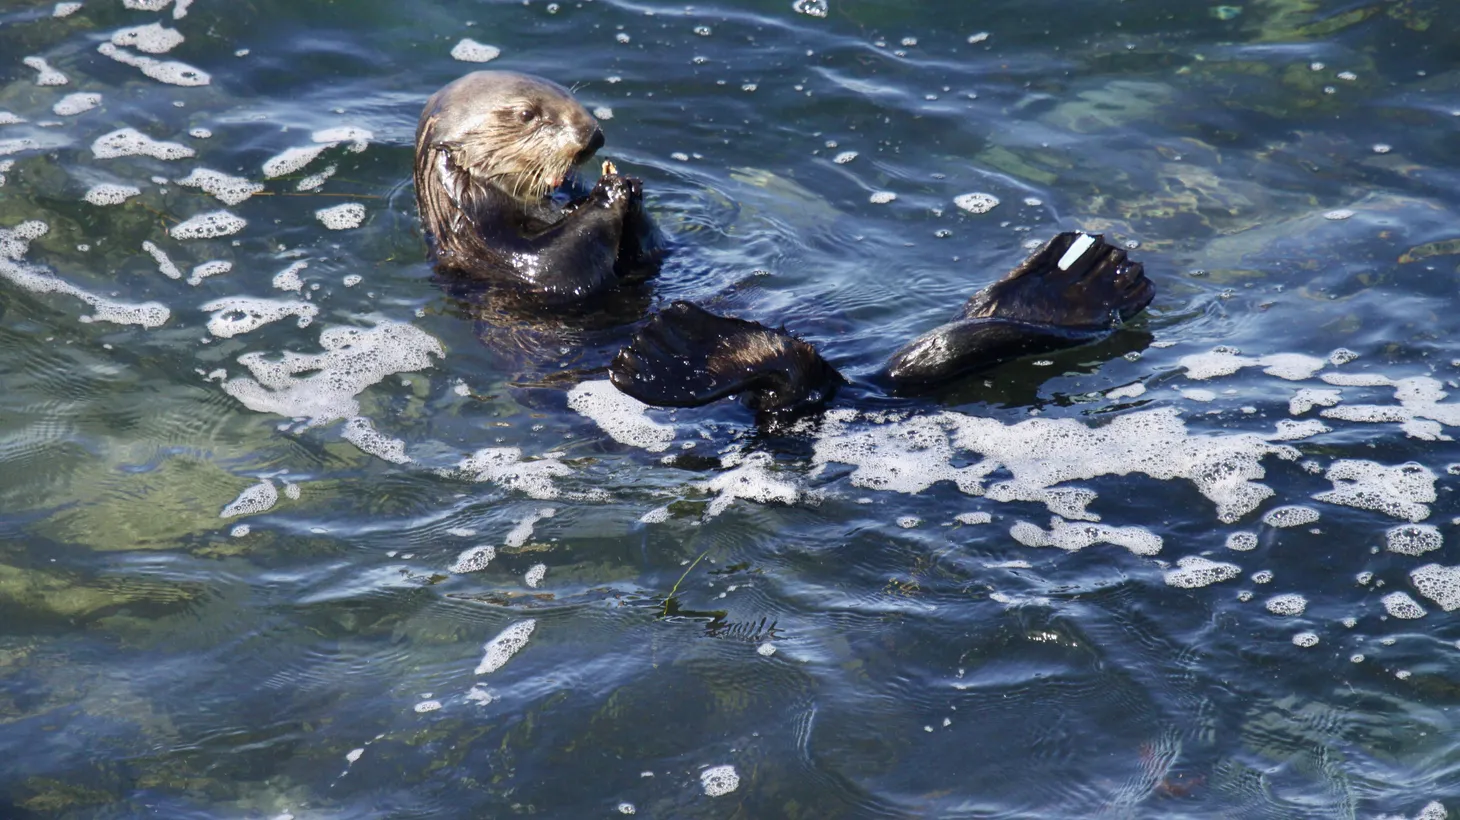 Sea Otter 841 foraging in shallow water in Santa Cruz, CA